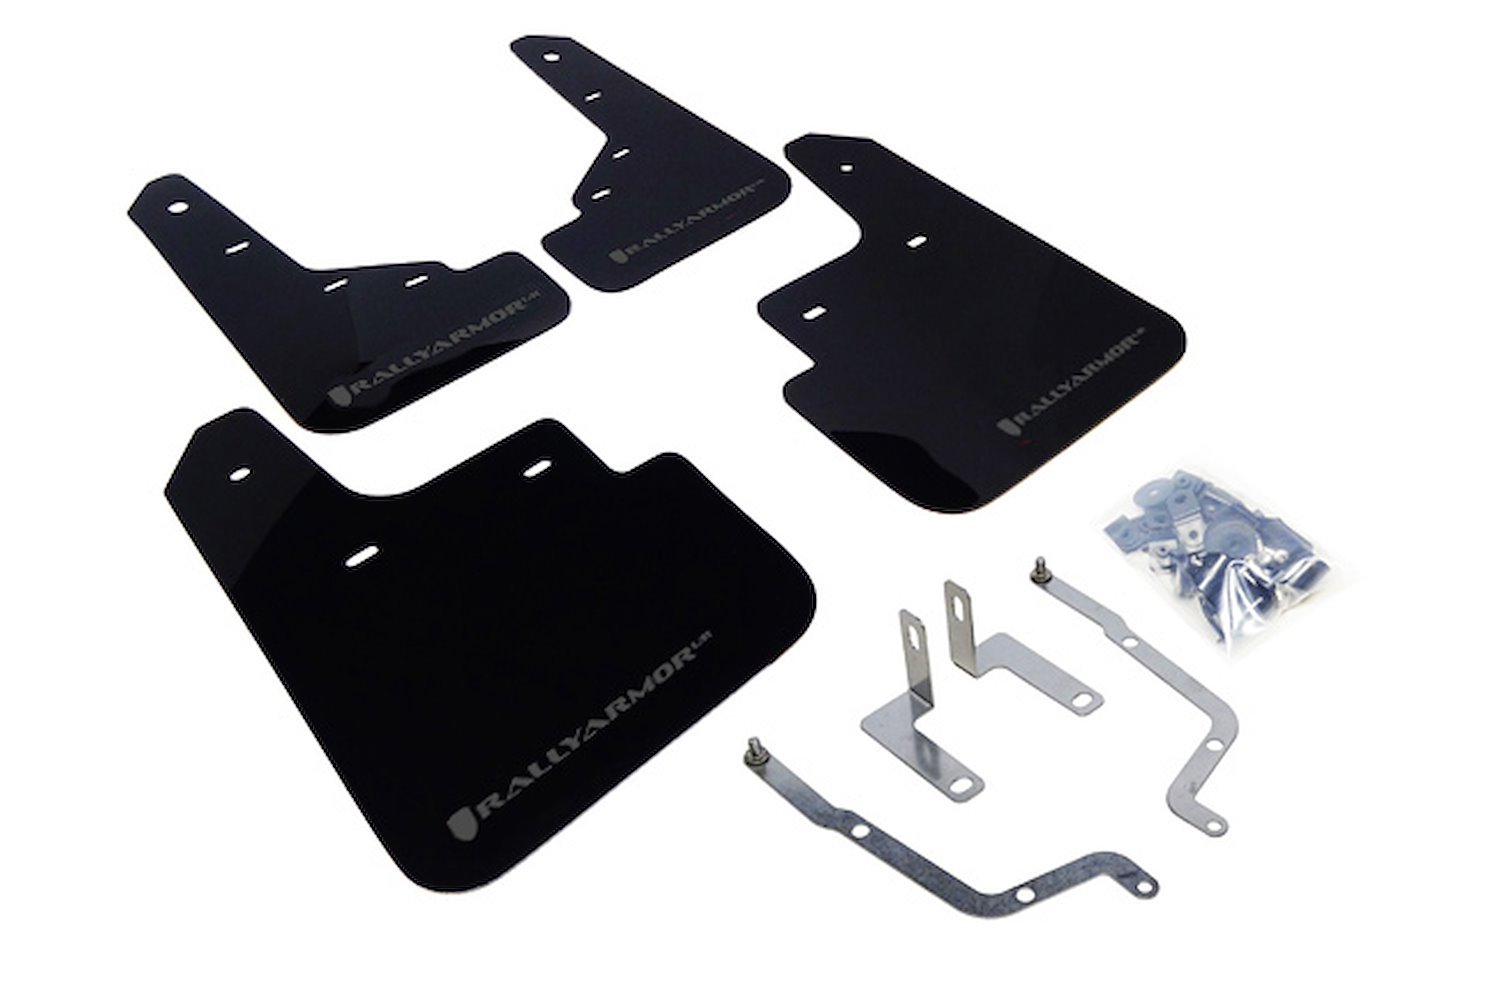 MF31URBLKGRY Mud Flap Kit for 2014-2018 Mazda 3 Grand Touring, Sport, SV, Touring - Grey Logo